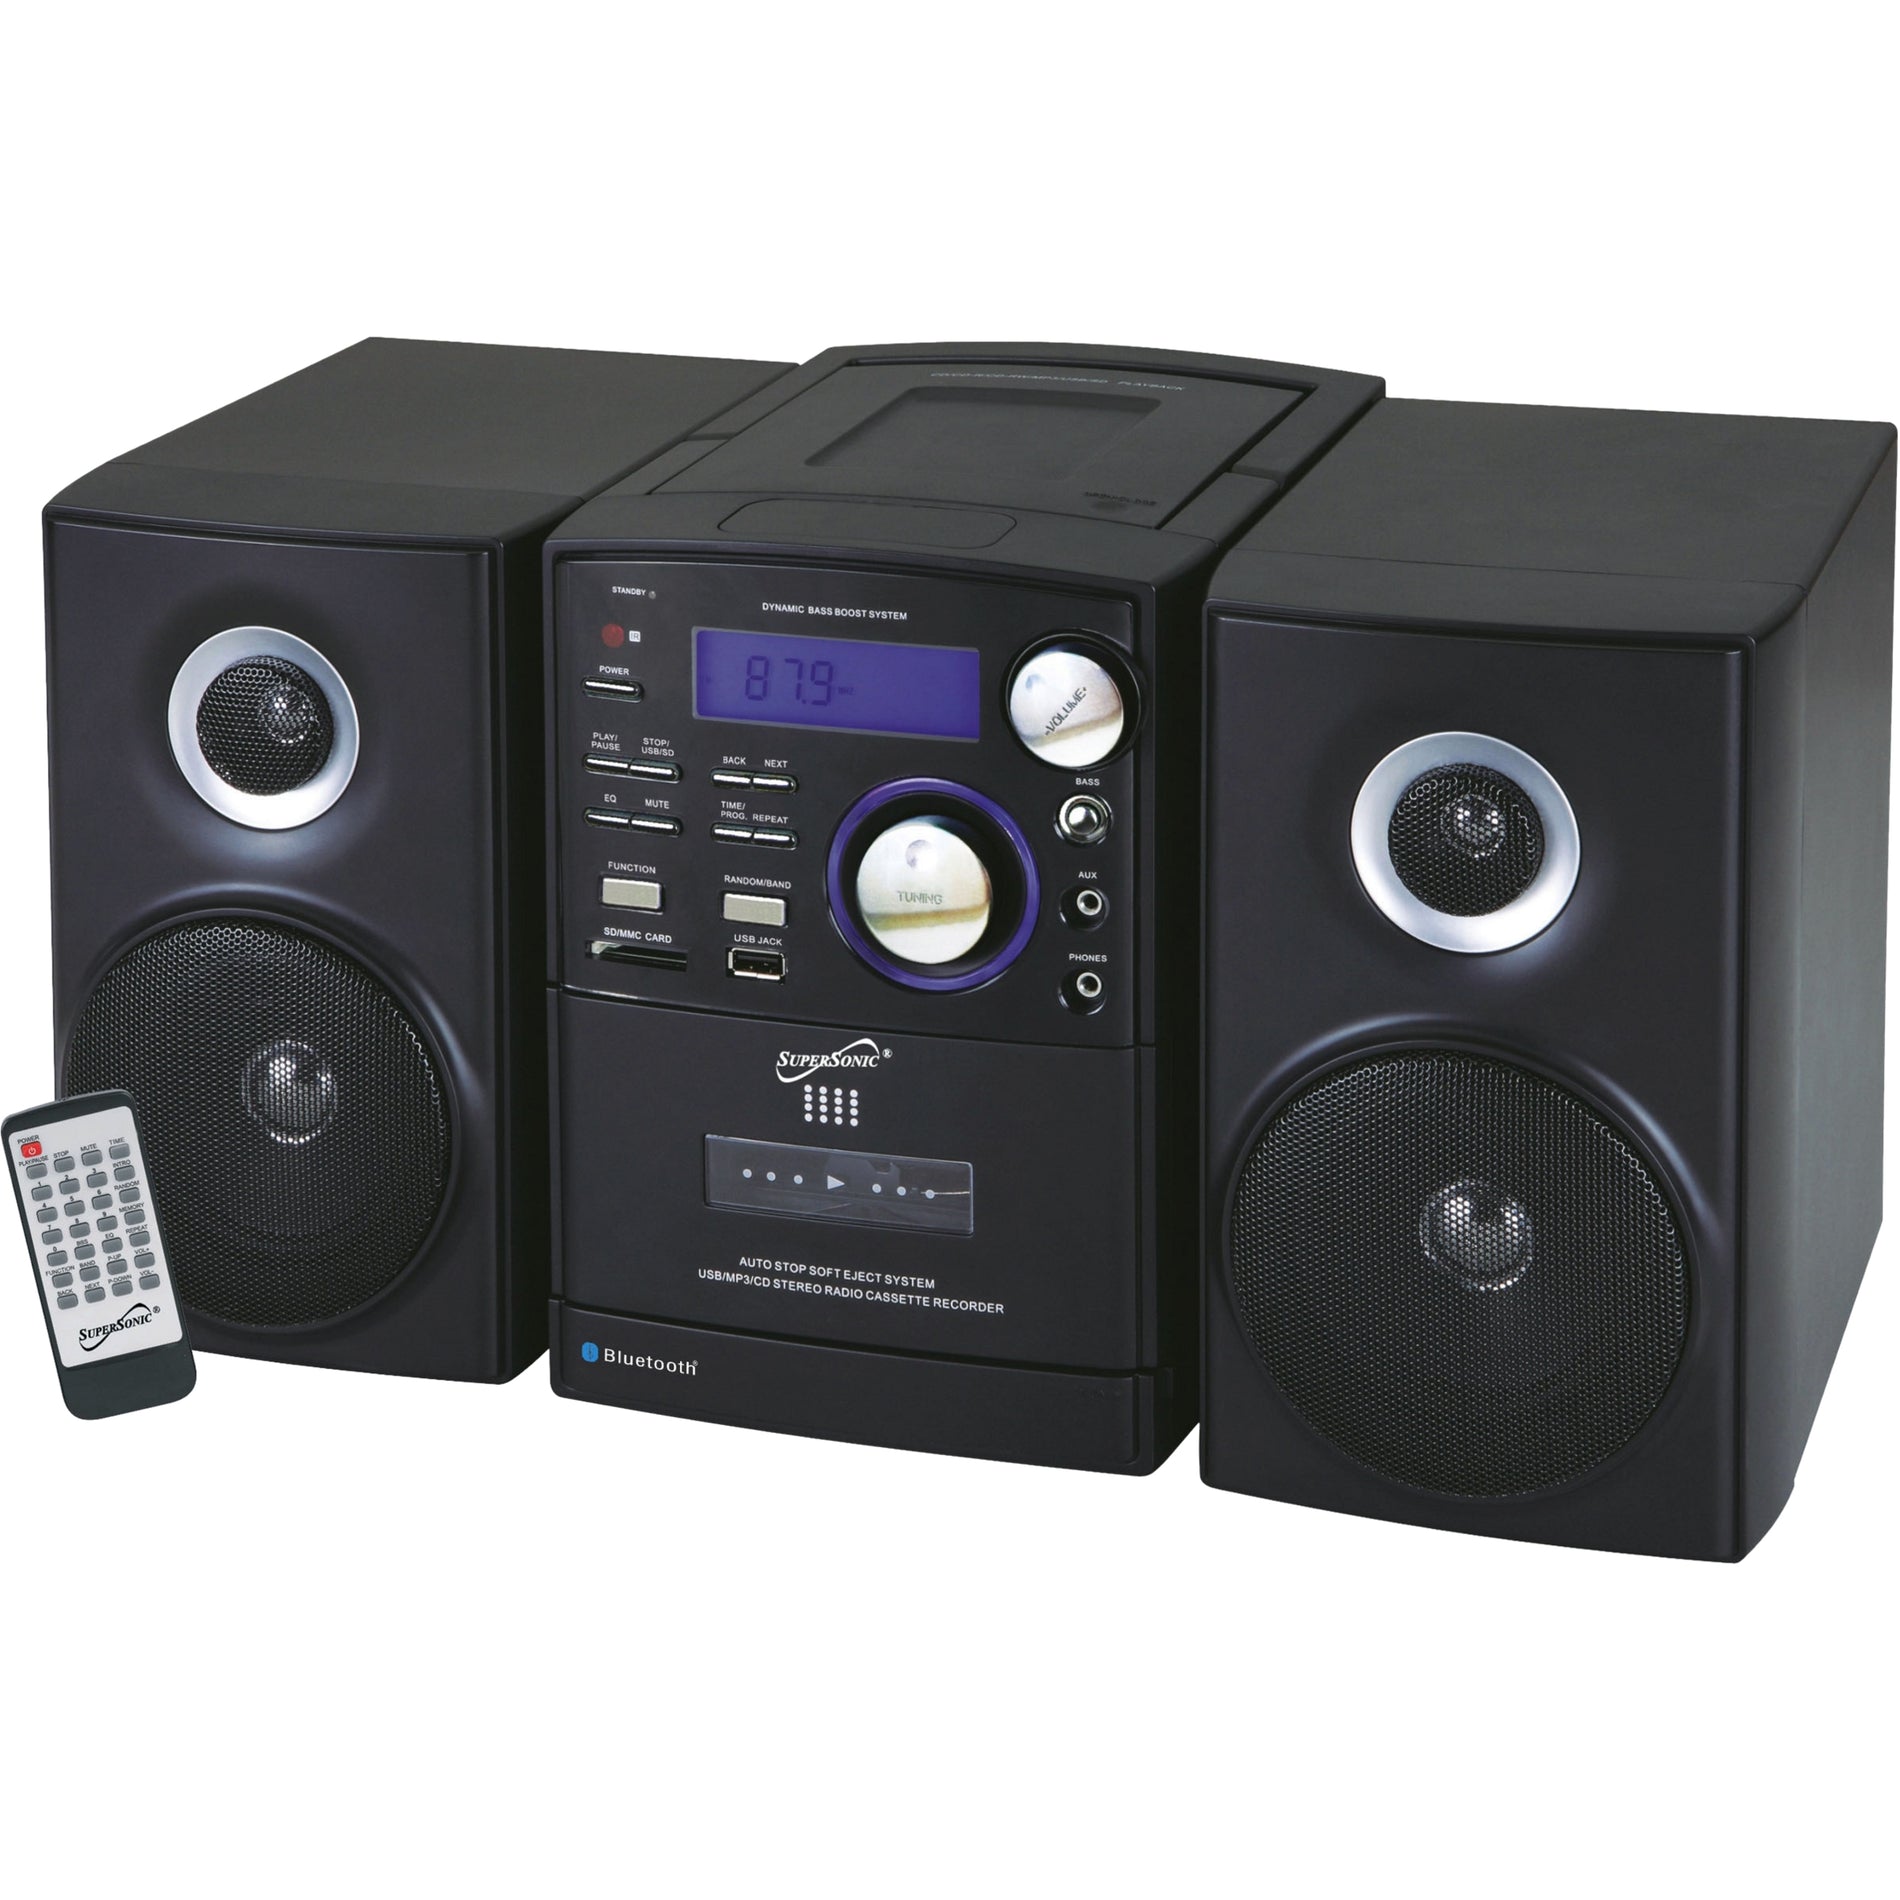 Supersonic SC-807 Micro Hi-Fi System iPod Supported, CD-DA, MP3, Bluetooth, Telescopic Antenna